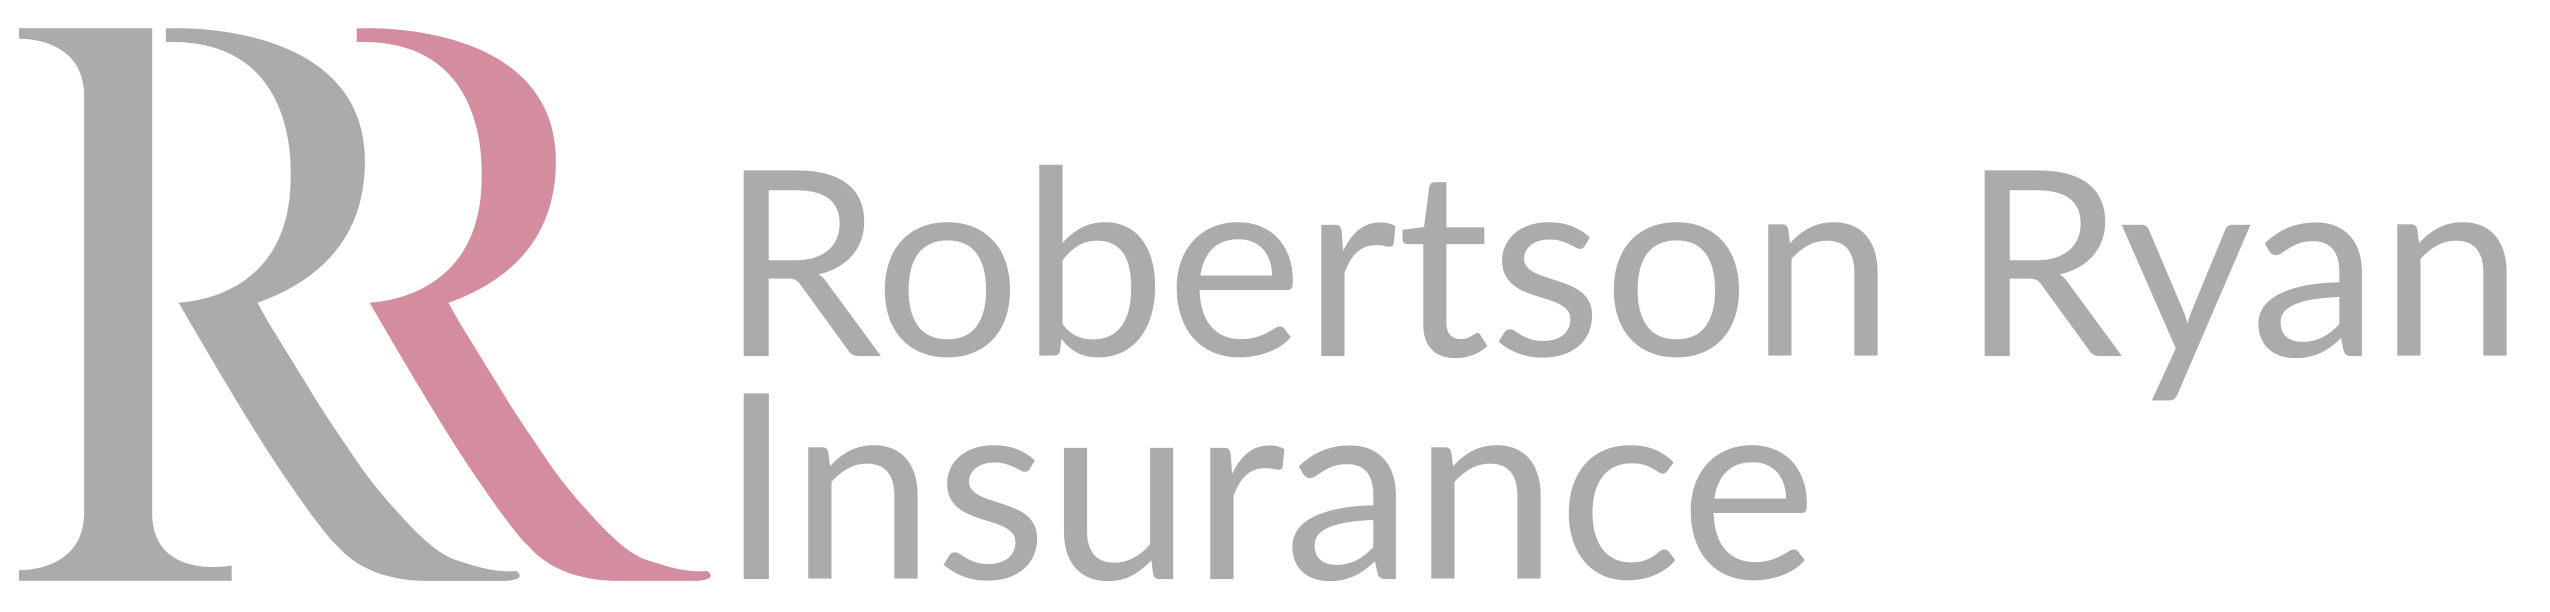 Robertson Ryan Insurance Company Logo